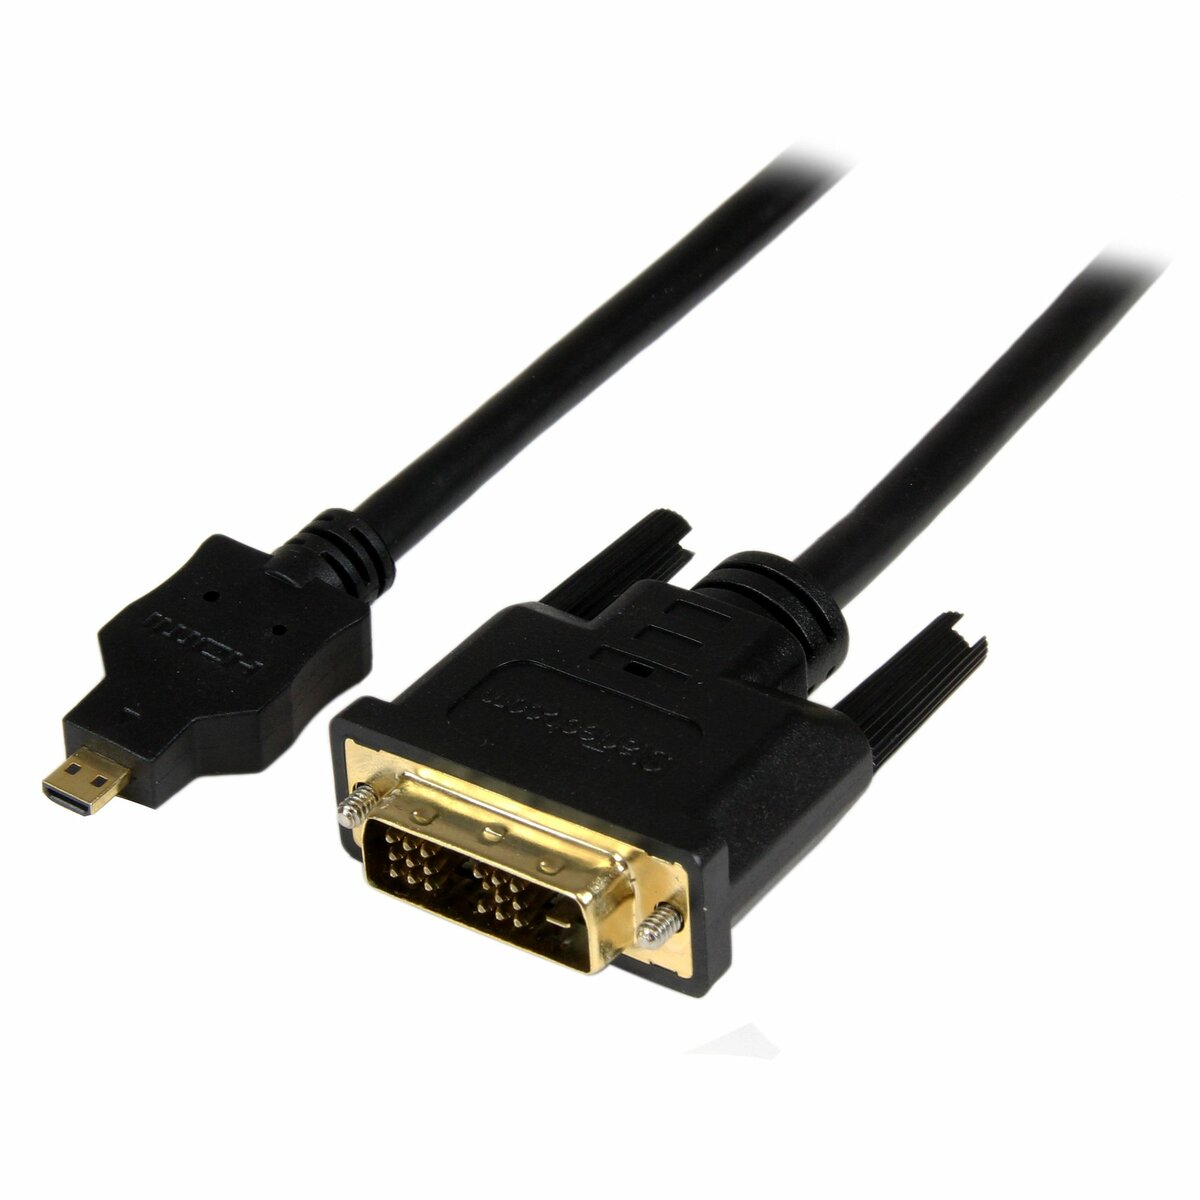 VisionTek USB C / Thunderbolt 3 to HDMI 2.0 2 Meter Cable (M/M)